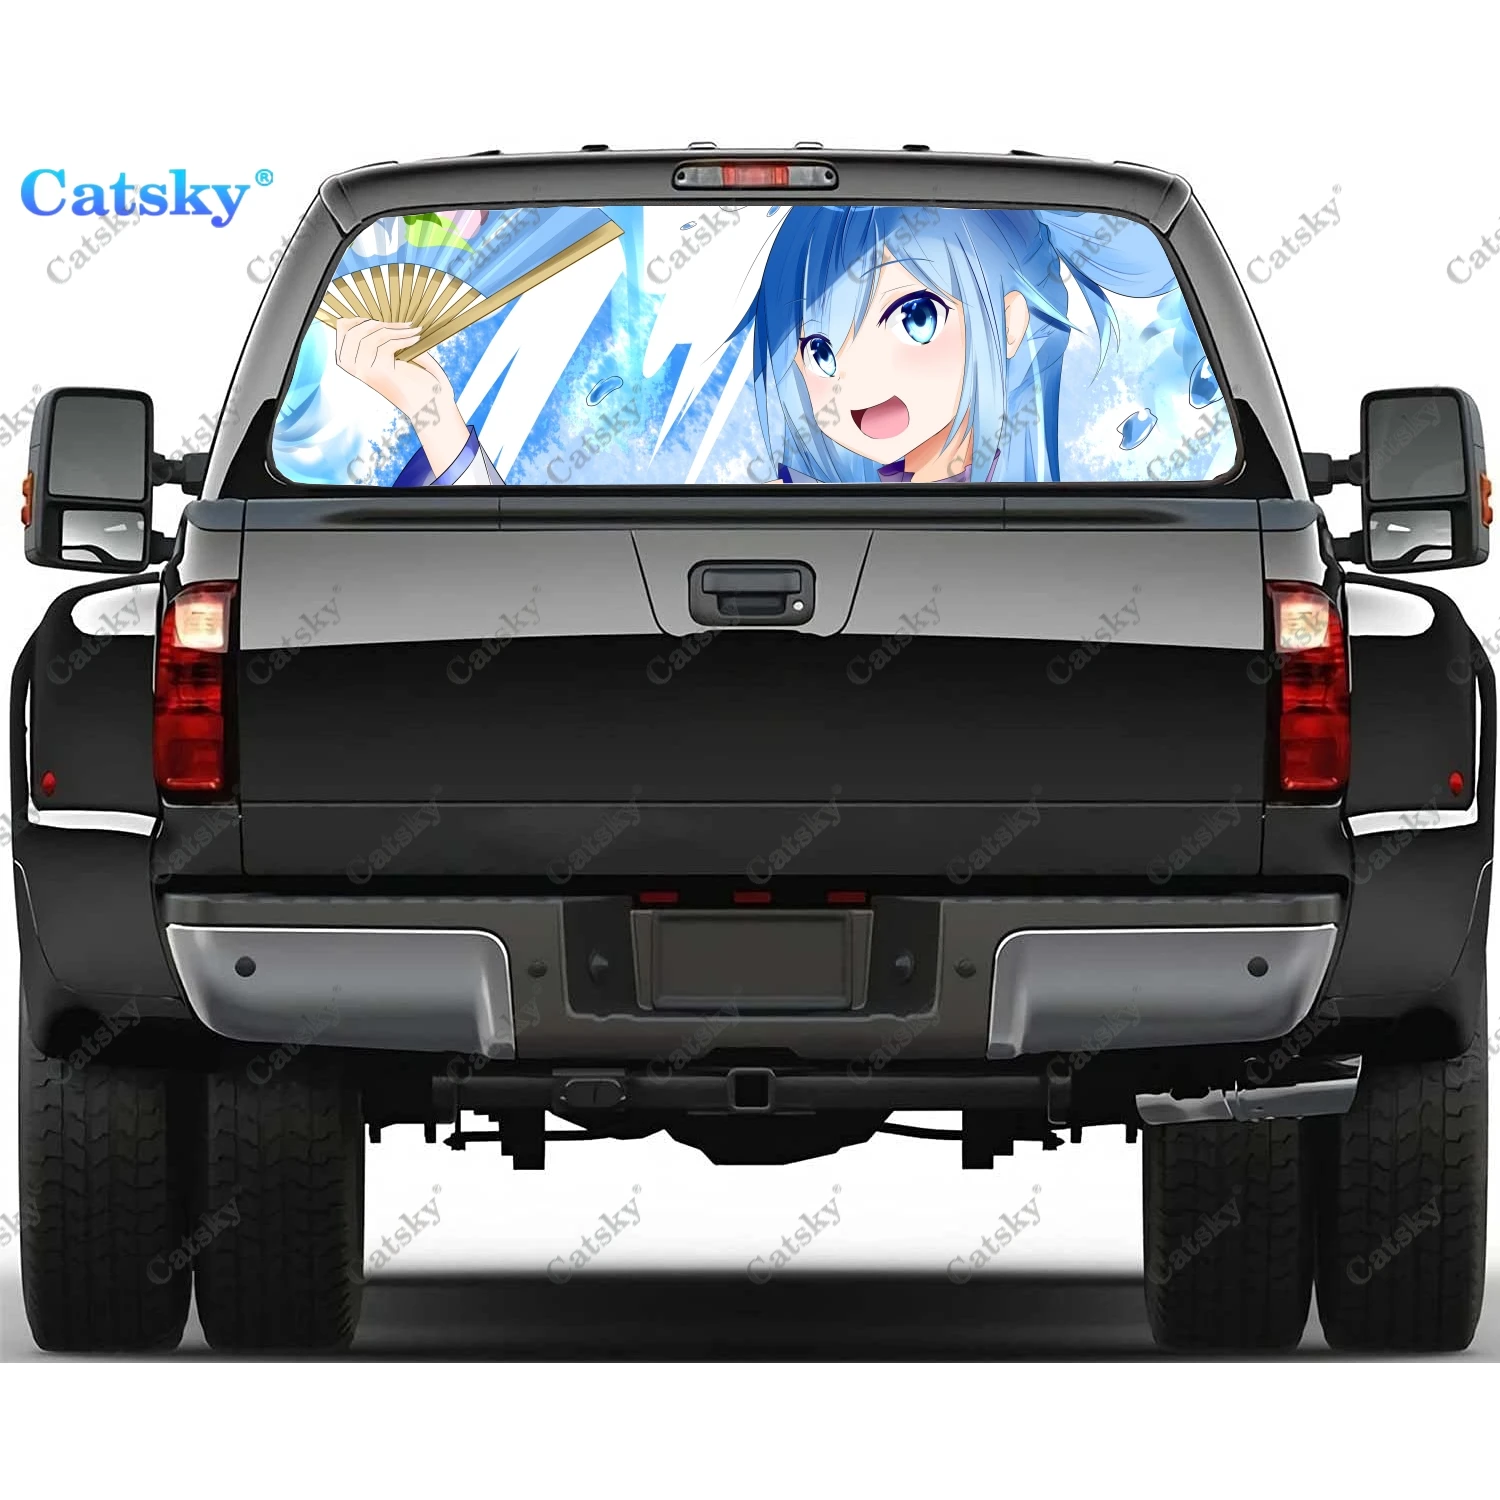 

Aqua (KonoSuba) Rear Window Decals for Truck,Pickup Window Decal,Rear Window Tint Graphic Perforated Vinyl Truck Sticker